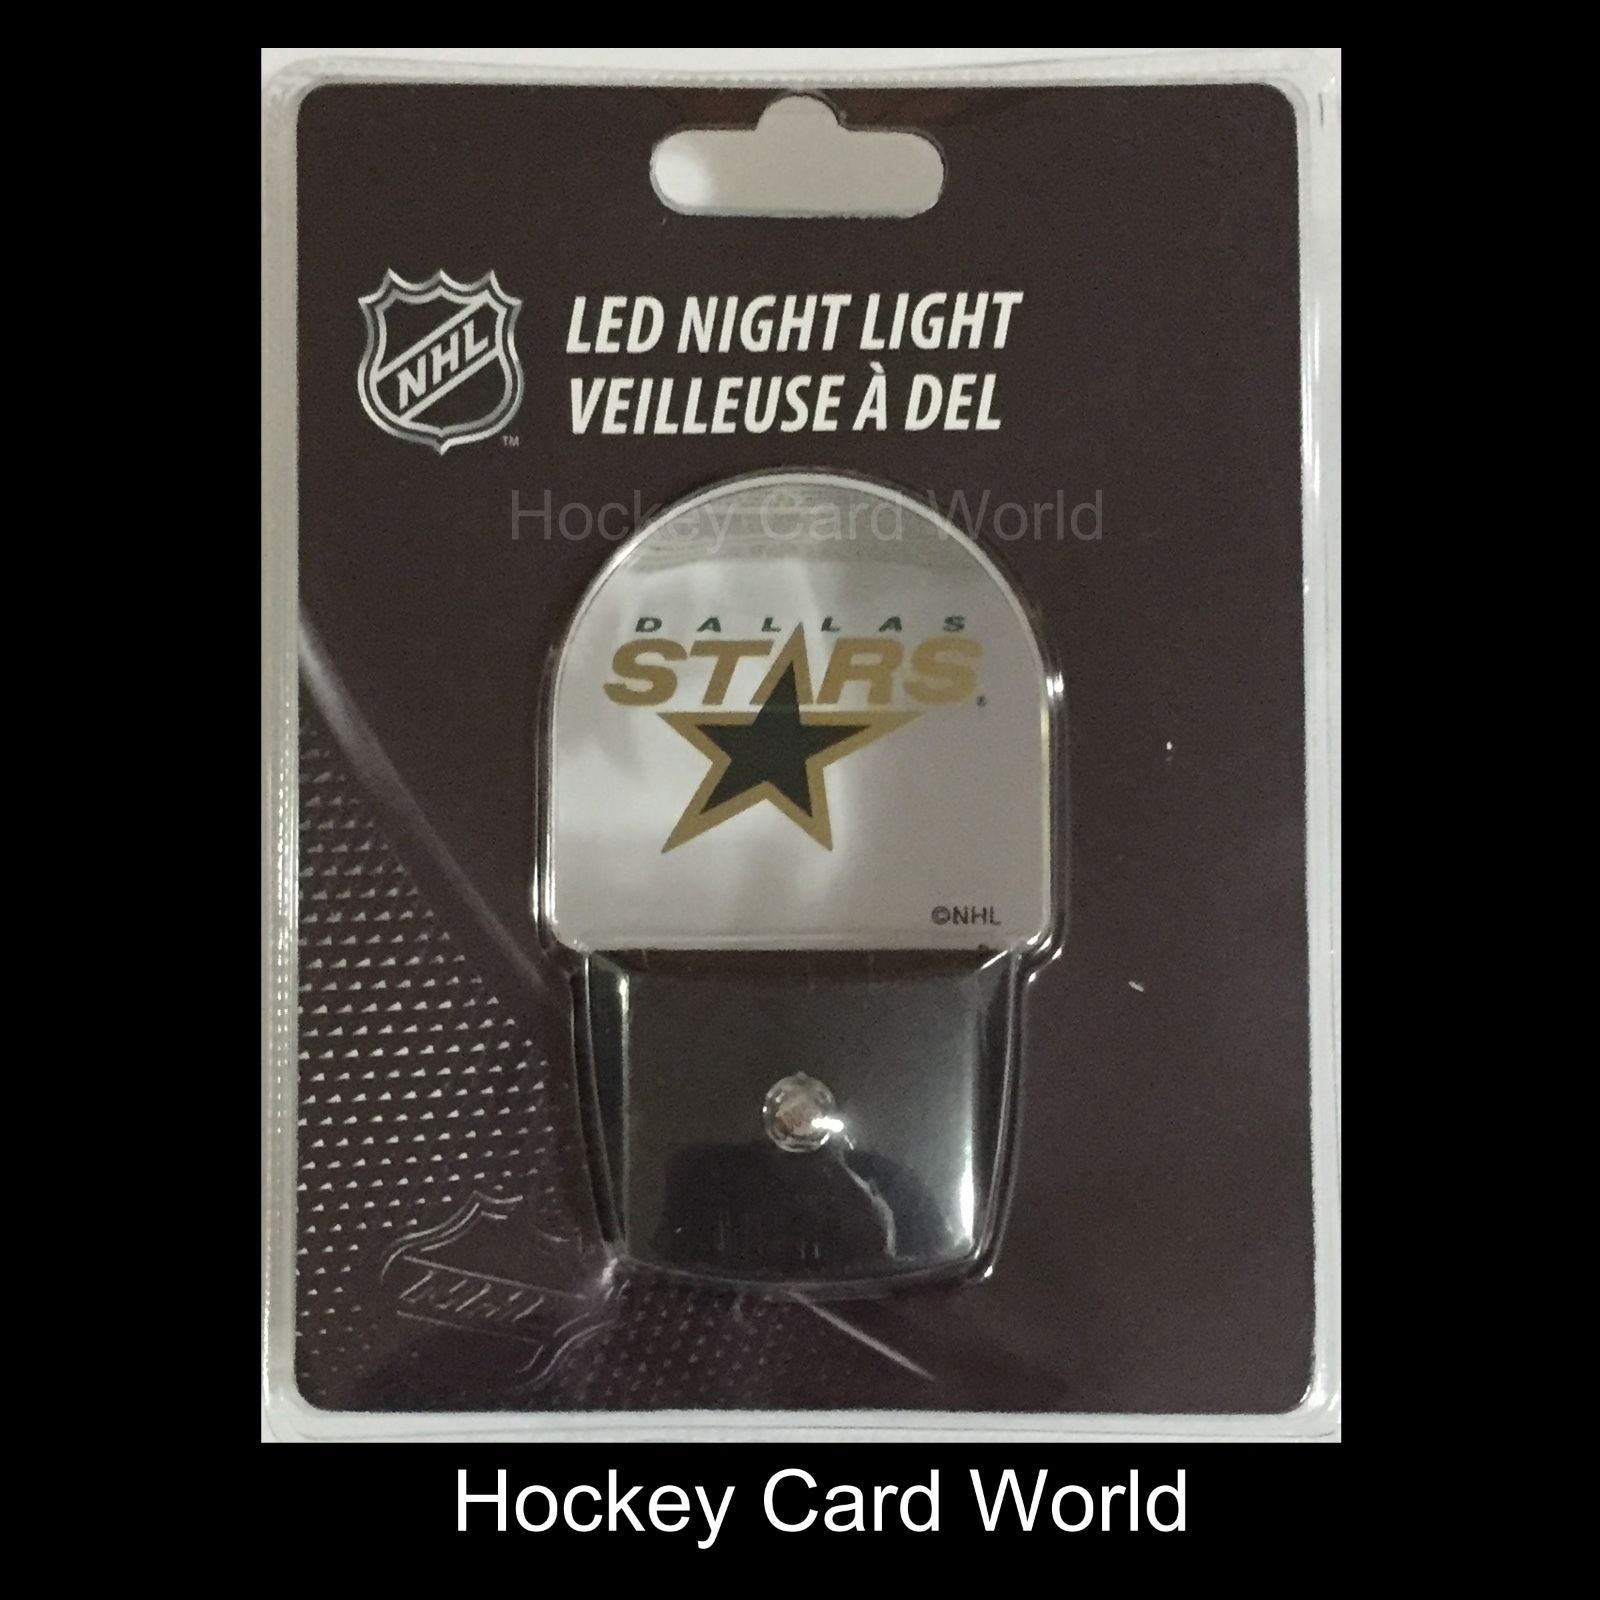  Dallas Stars Licensed NHL LED Night Light - Brand New In Box Image 1